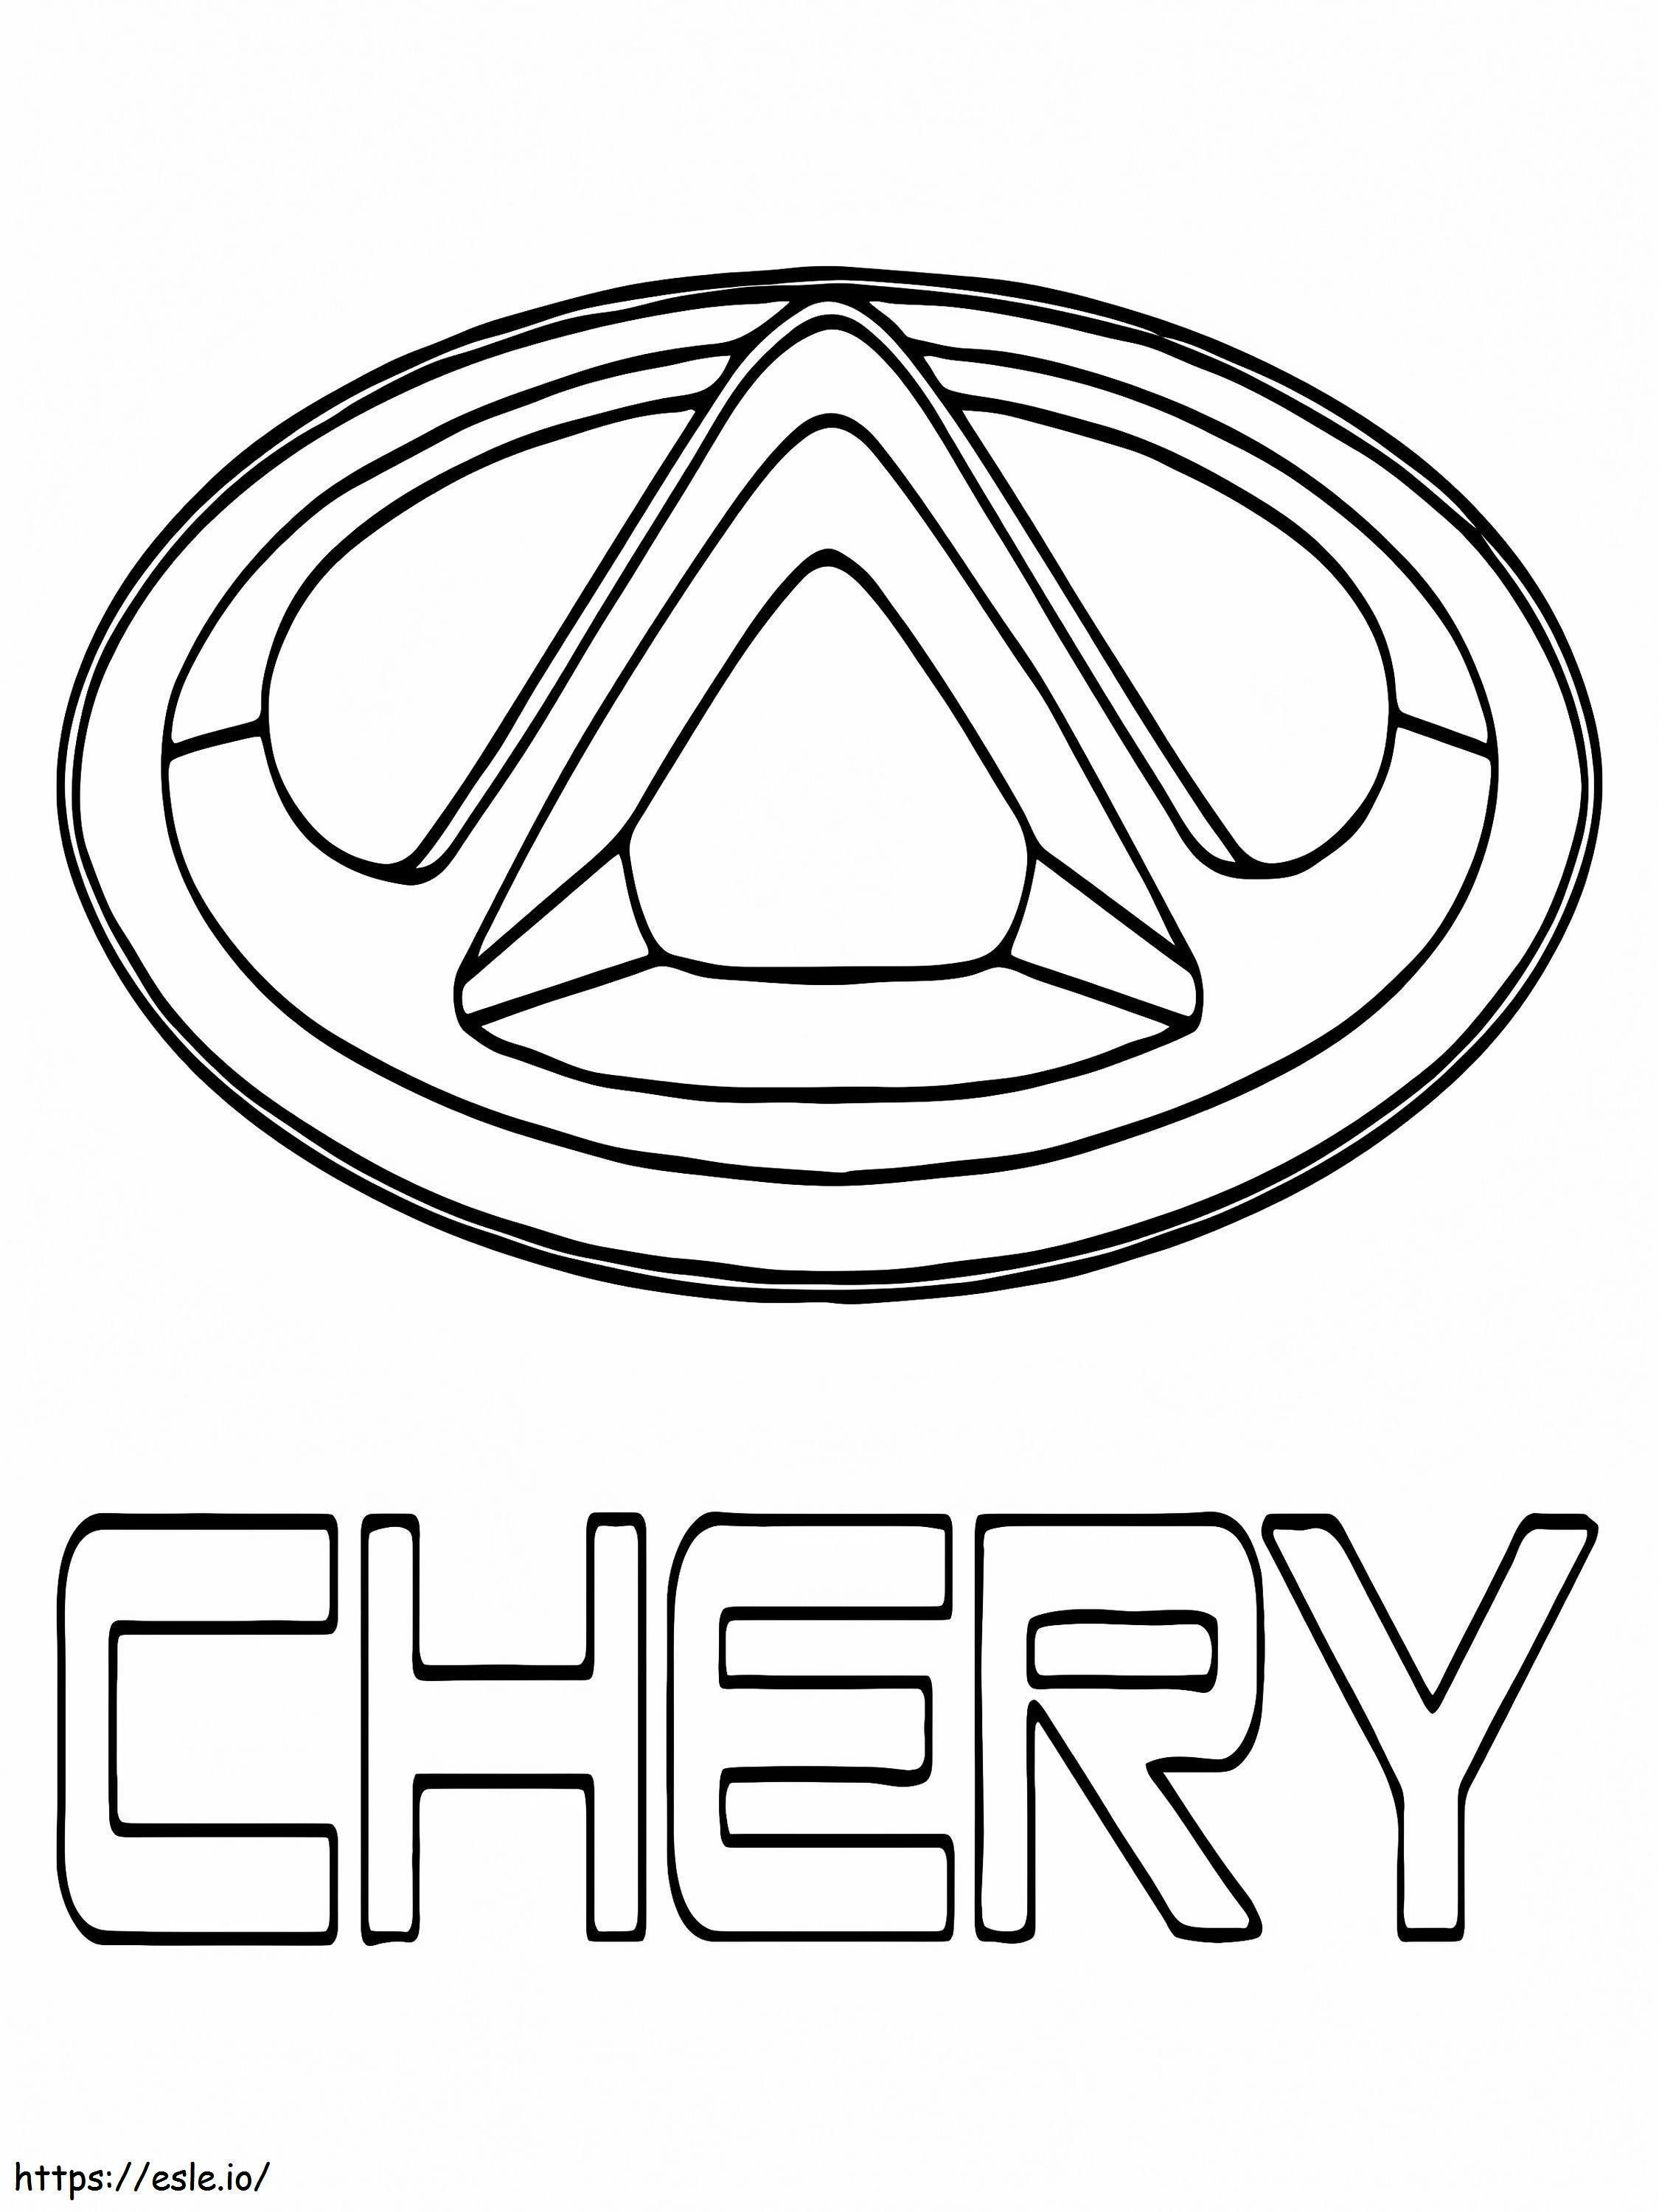 Logo Mobil Chery Gambar Mewarnai